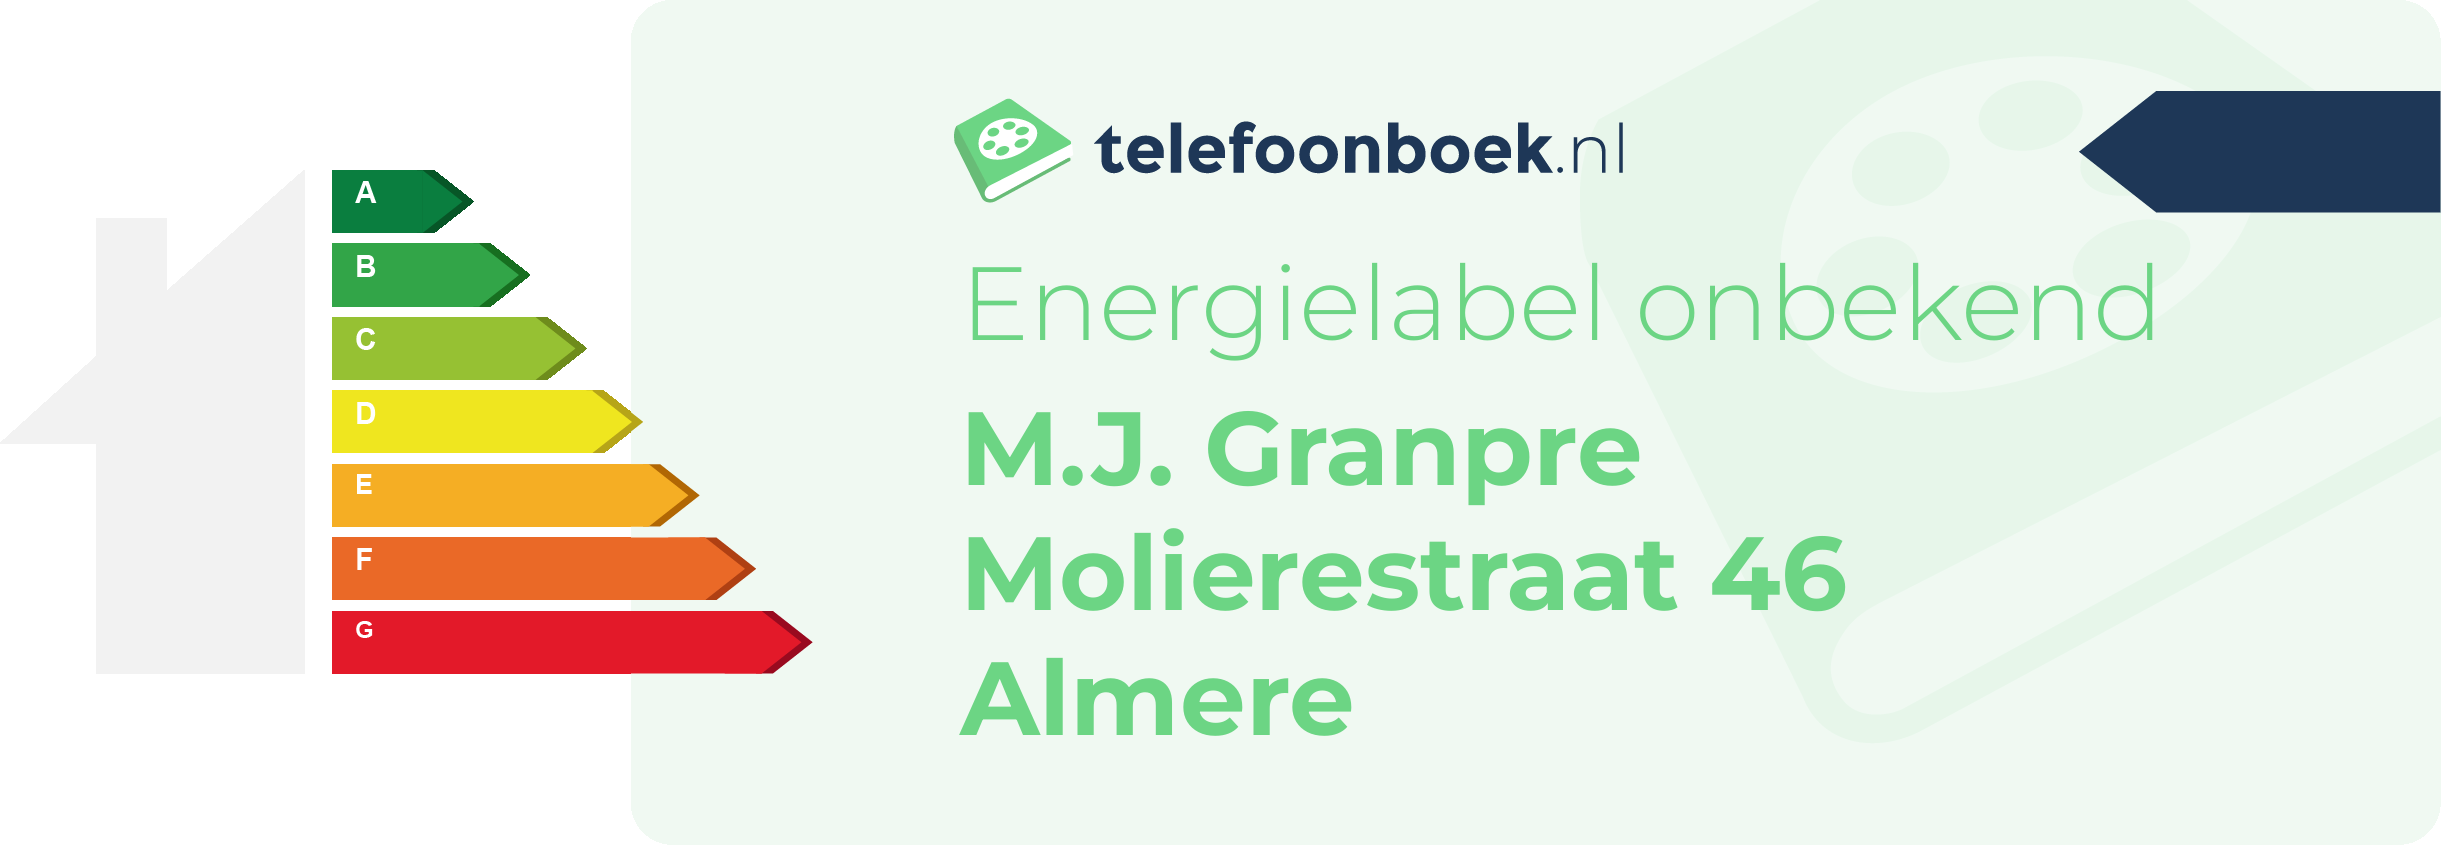 Energielabel M.J. Granpre Molierestraat 46 Almere